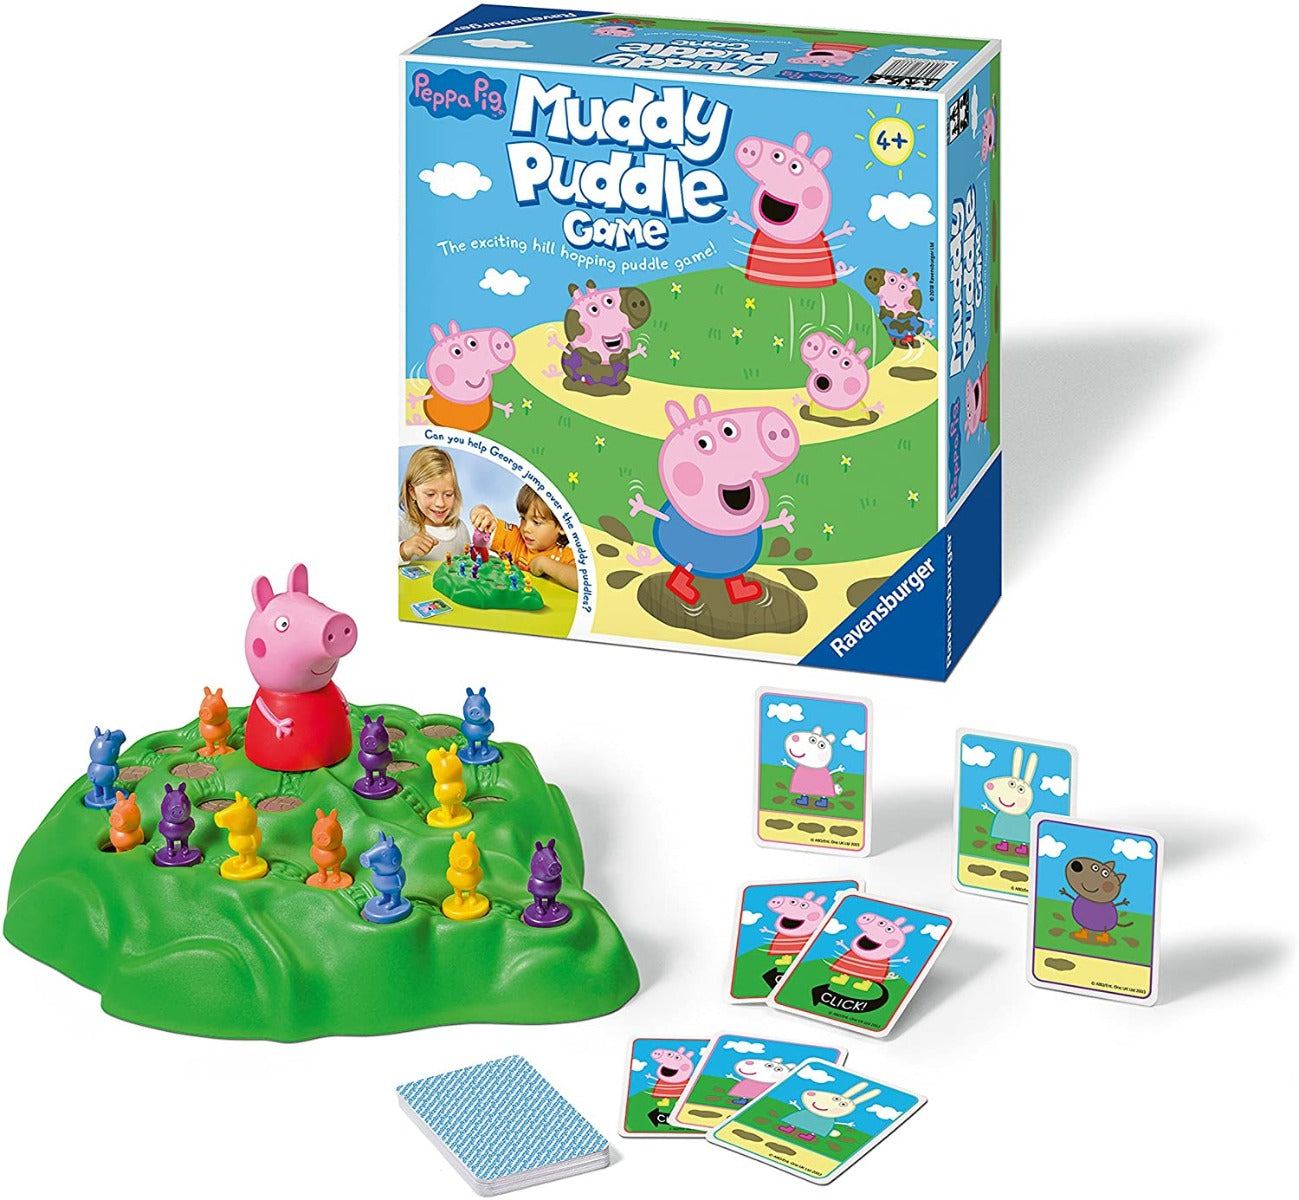 Ravensburger Peppa Pig Muddy Puddles Game